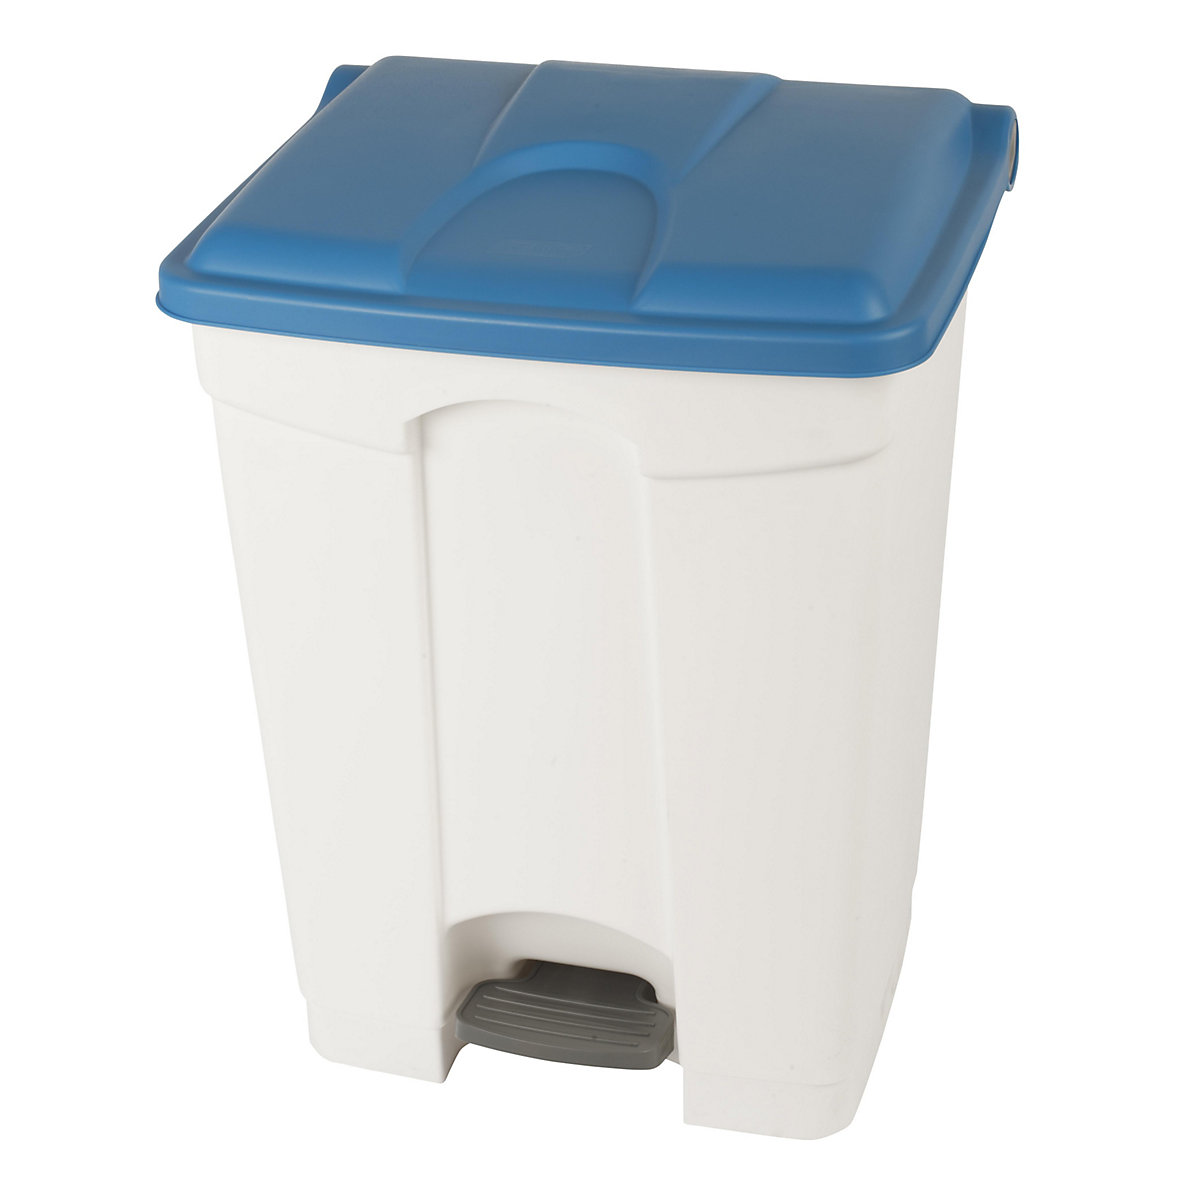 EUROKRAFTbasic – Afvalverzamelaar met pedaal, inhoud 70 l, b x h x d = 505 x 675 x 415 mm, wit, deksel blauw